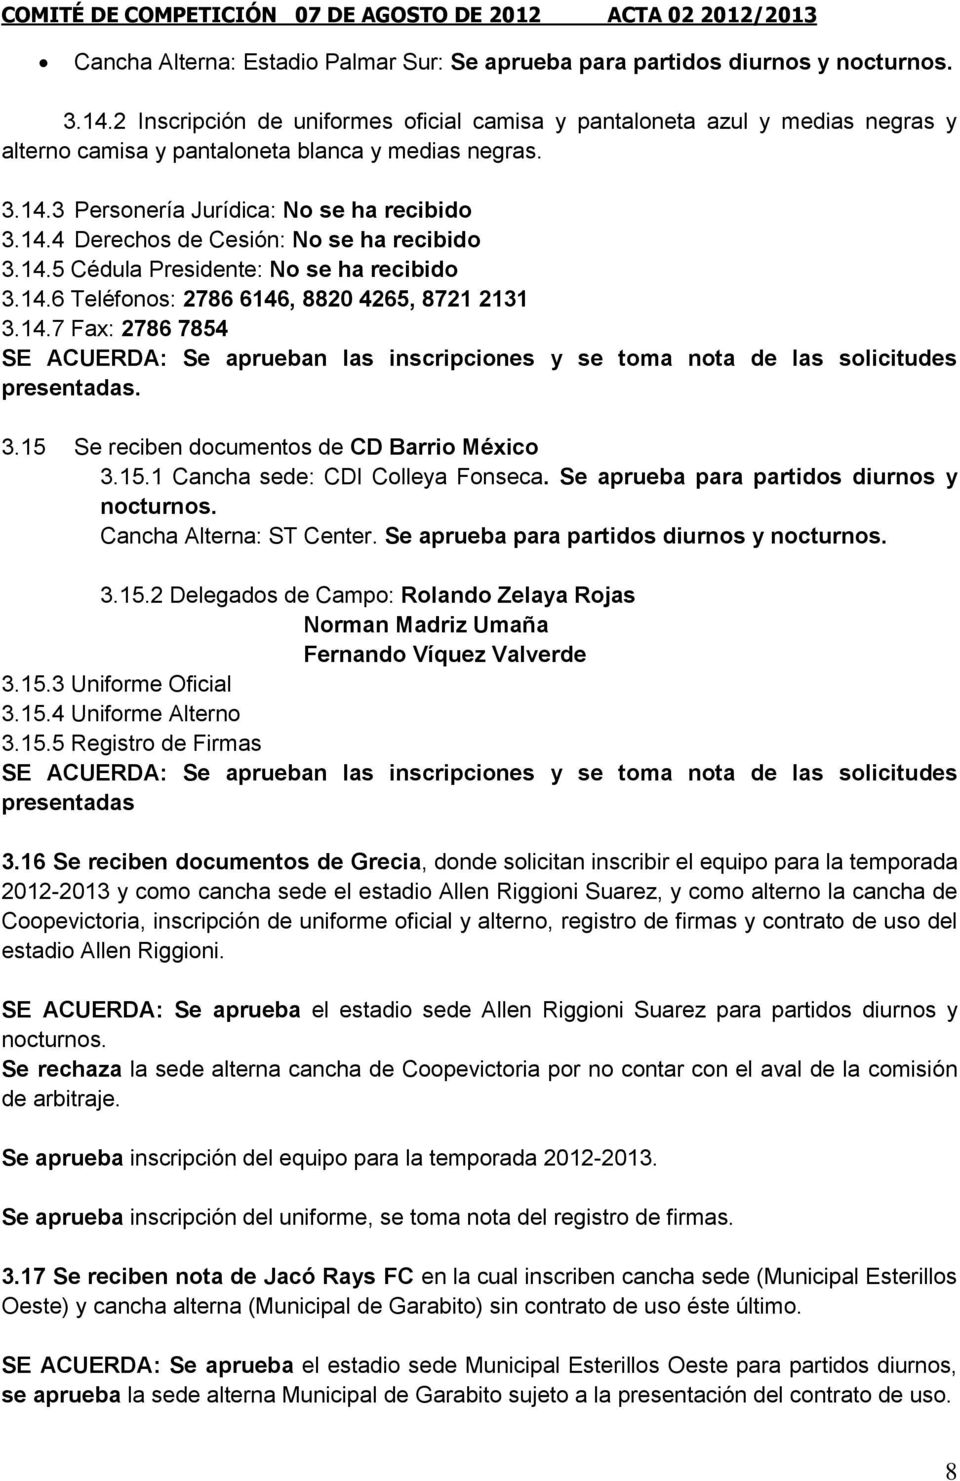 14.5 Cédula Presidente: No se ha recibido 3.14.6 Teléfonos: 2786 6146, 8820 4265, 8721 2131 3.14.7 Fax: 2786 7854 n las inscripciones y se toma nota de las solicitudes presentadas. 3.15 Se reciben documentos de CD Barrio México 3.